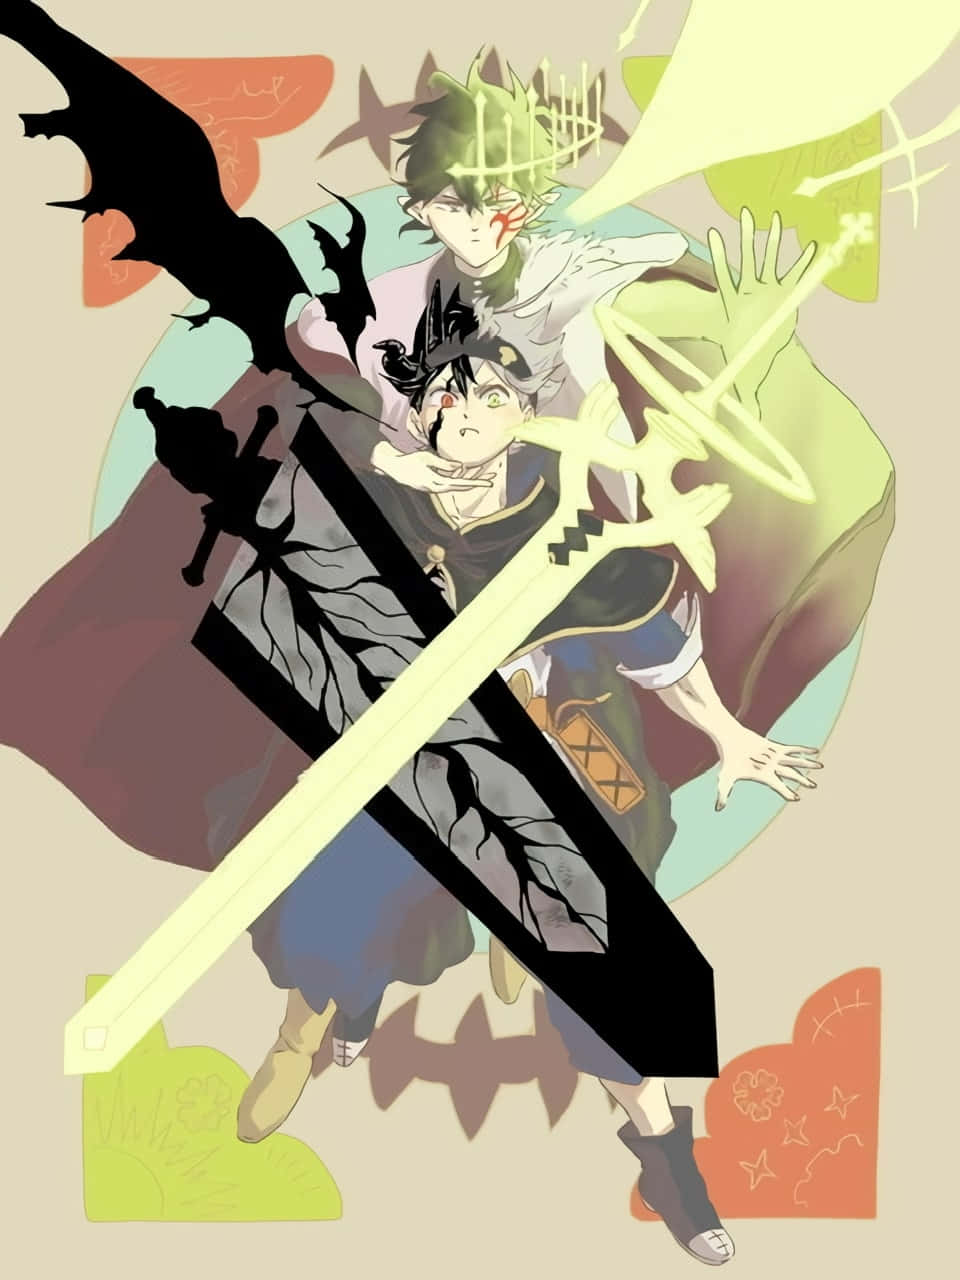 Duepersonaggi Anime Con Spade E Un Drago Sfondo